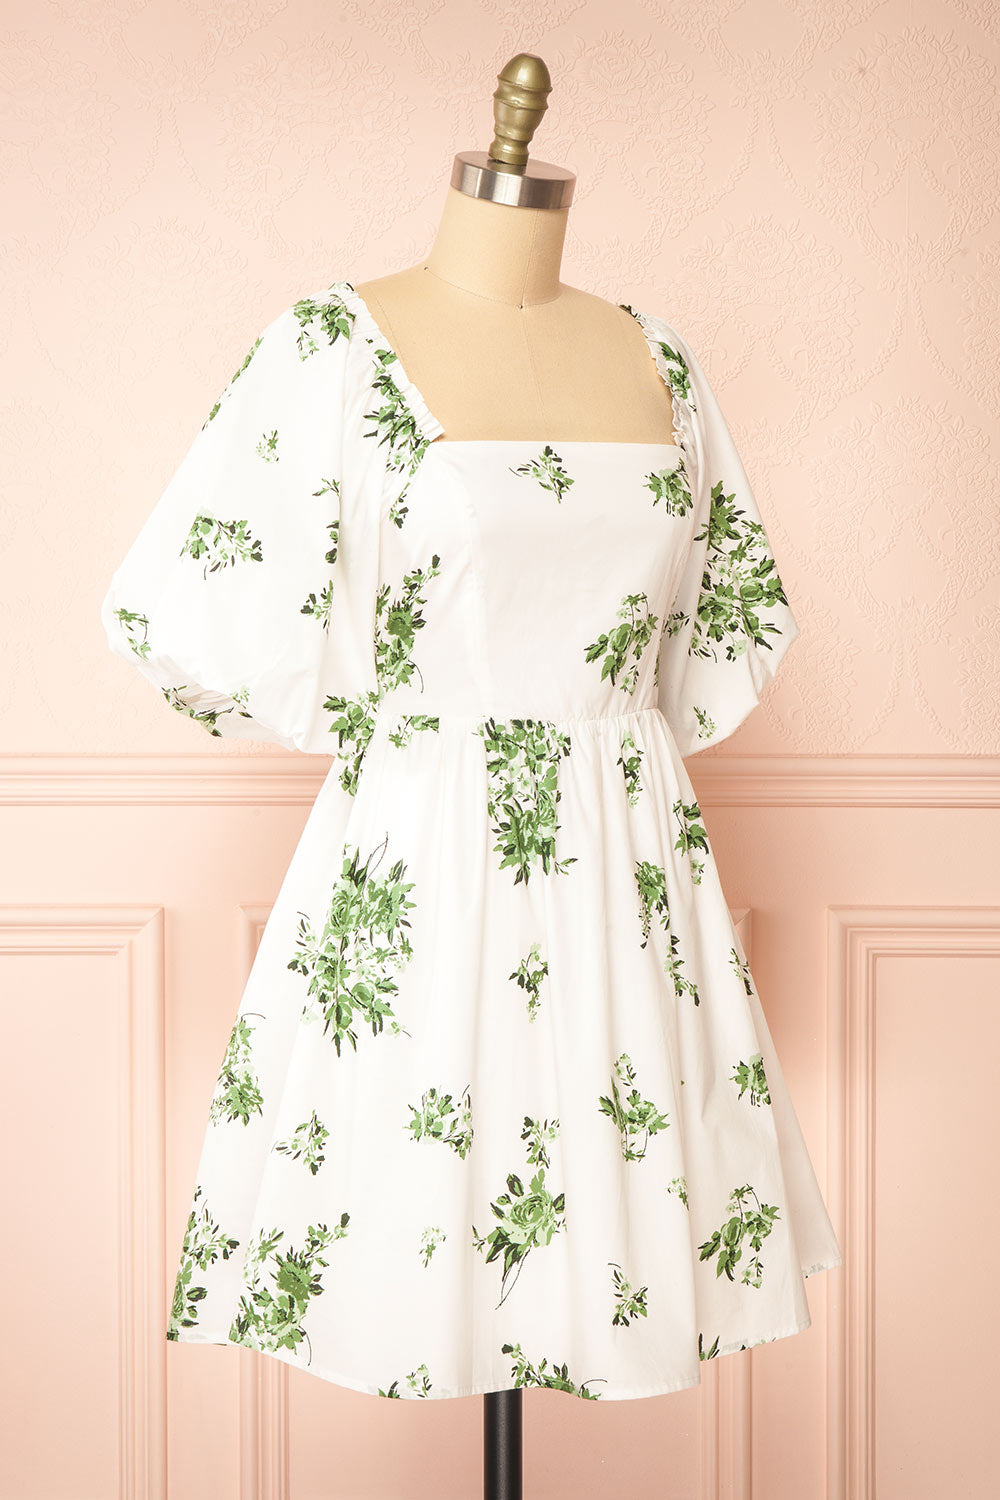 Vertuosa Short White Dress w/ Green Flowers | Boutique 1861 side view